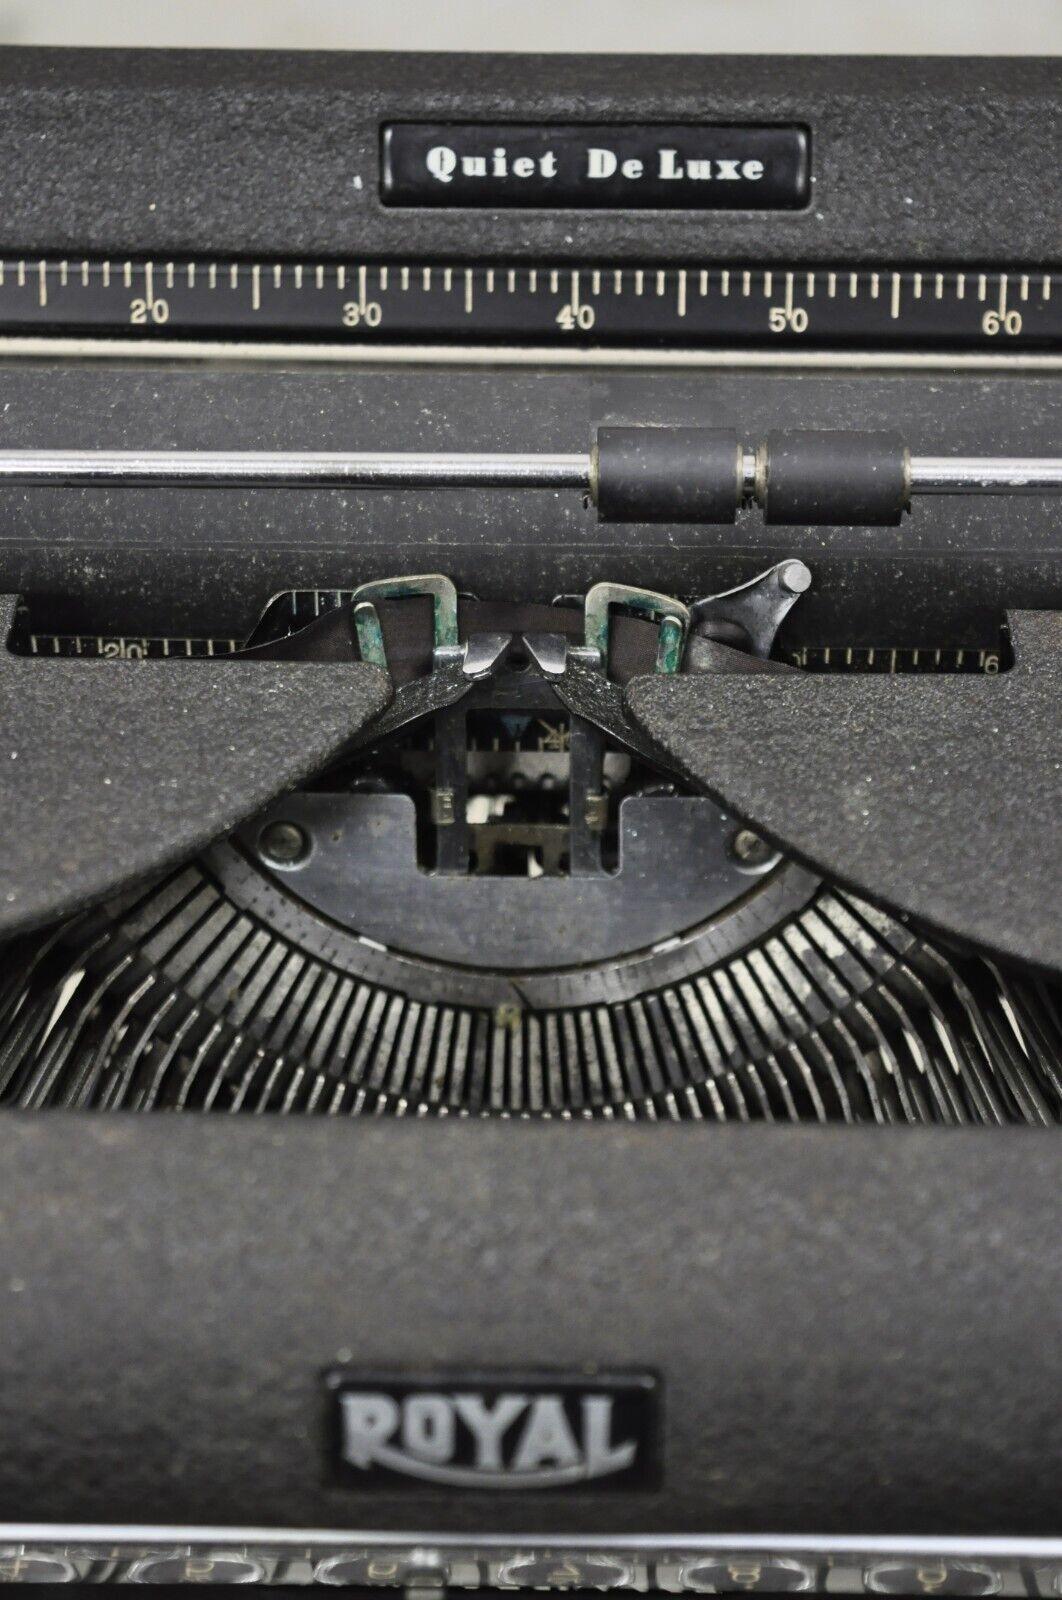 Art Deco Vintage Royal Typewriter Co Quiet Deluxe Portable Typewriter in Box Case